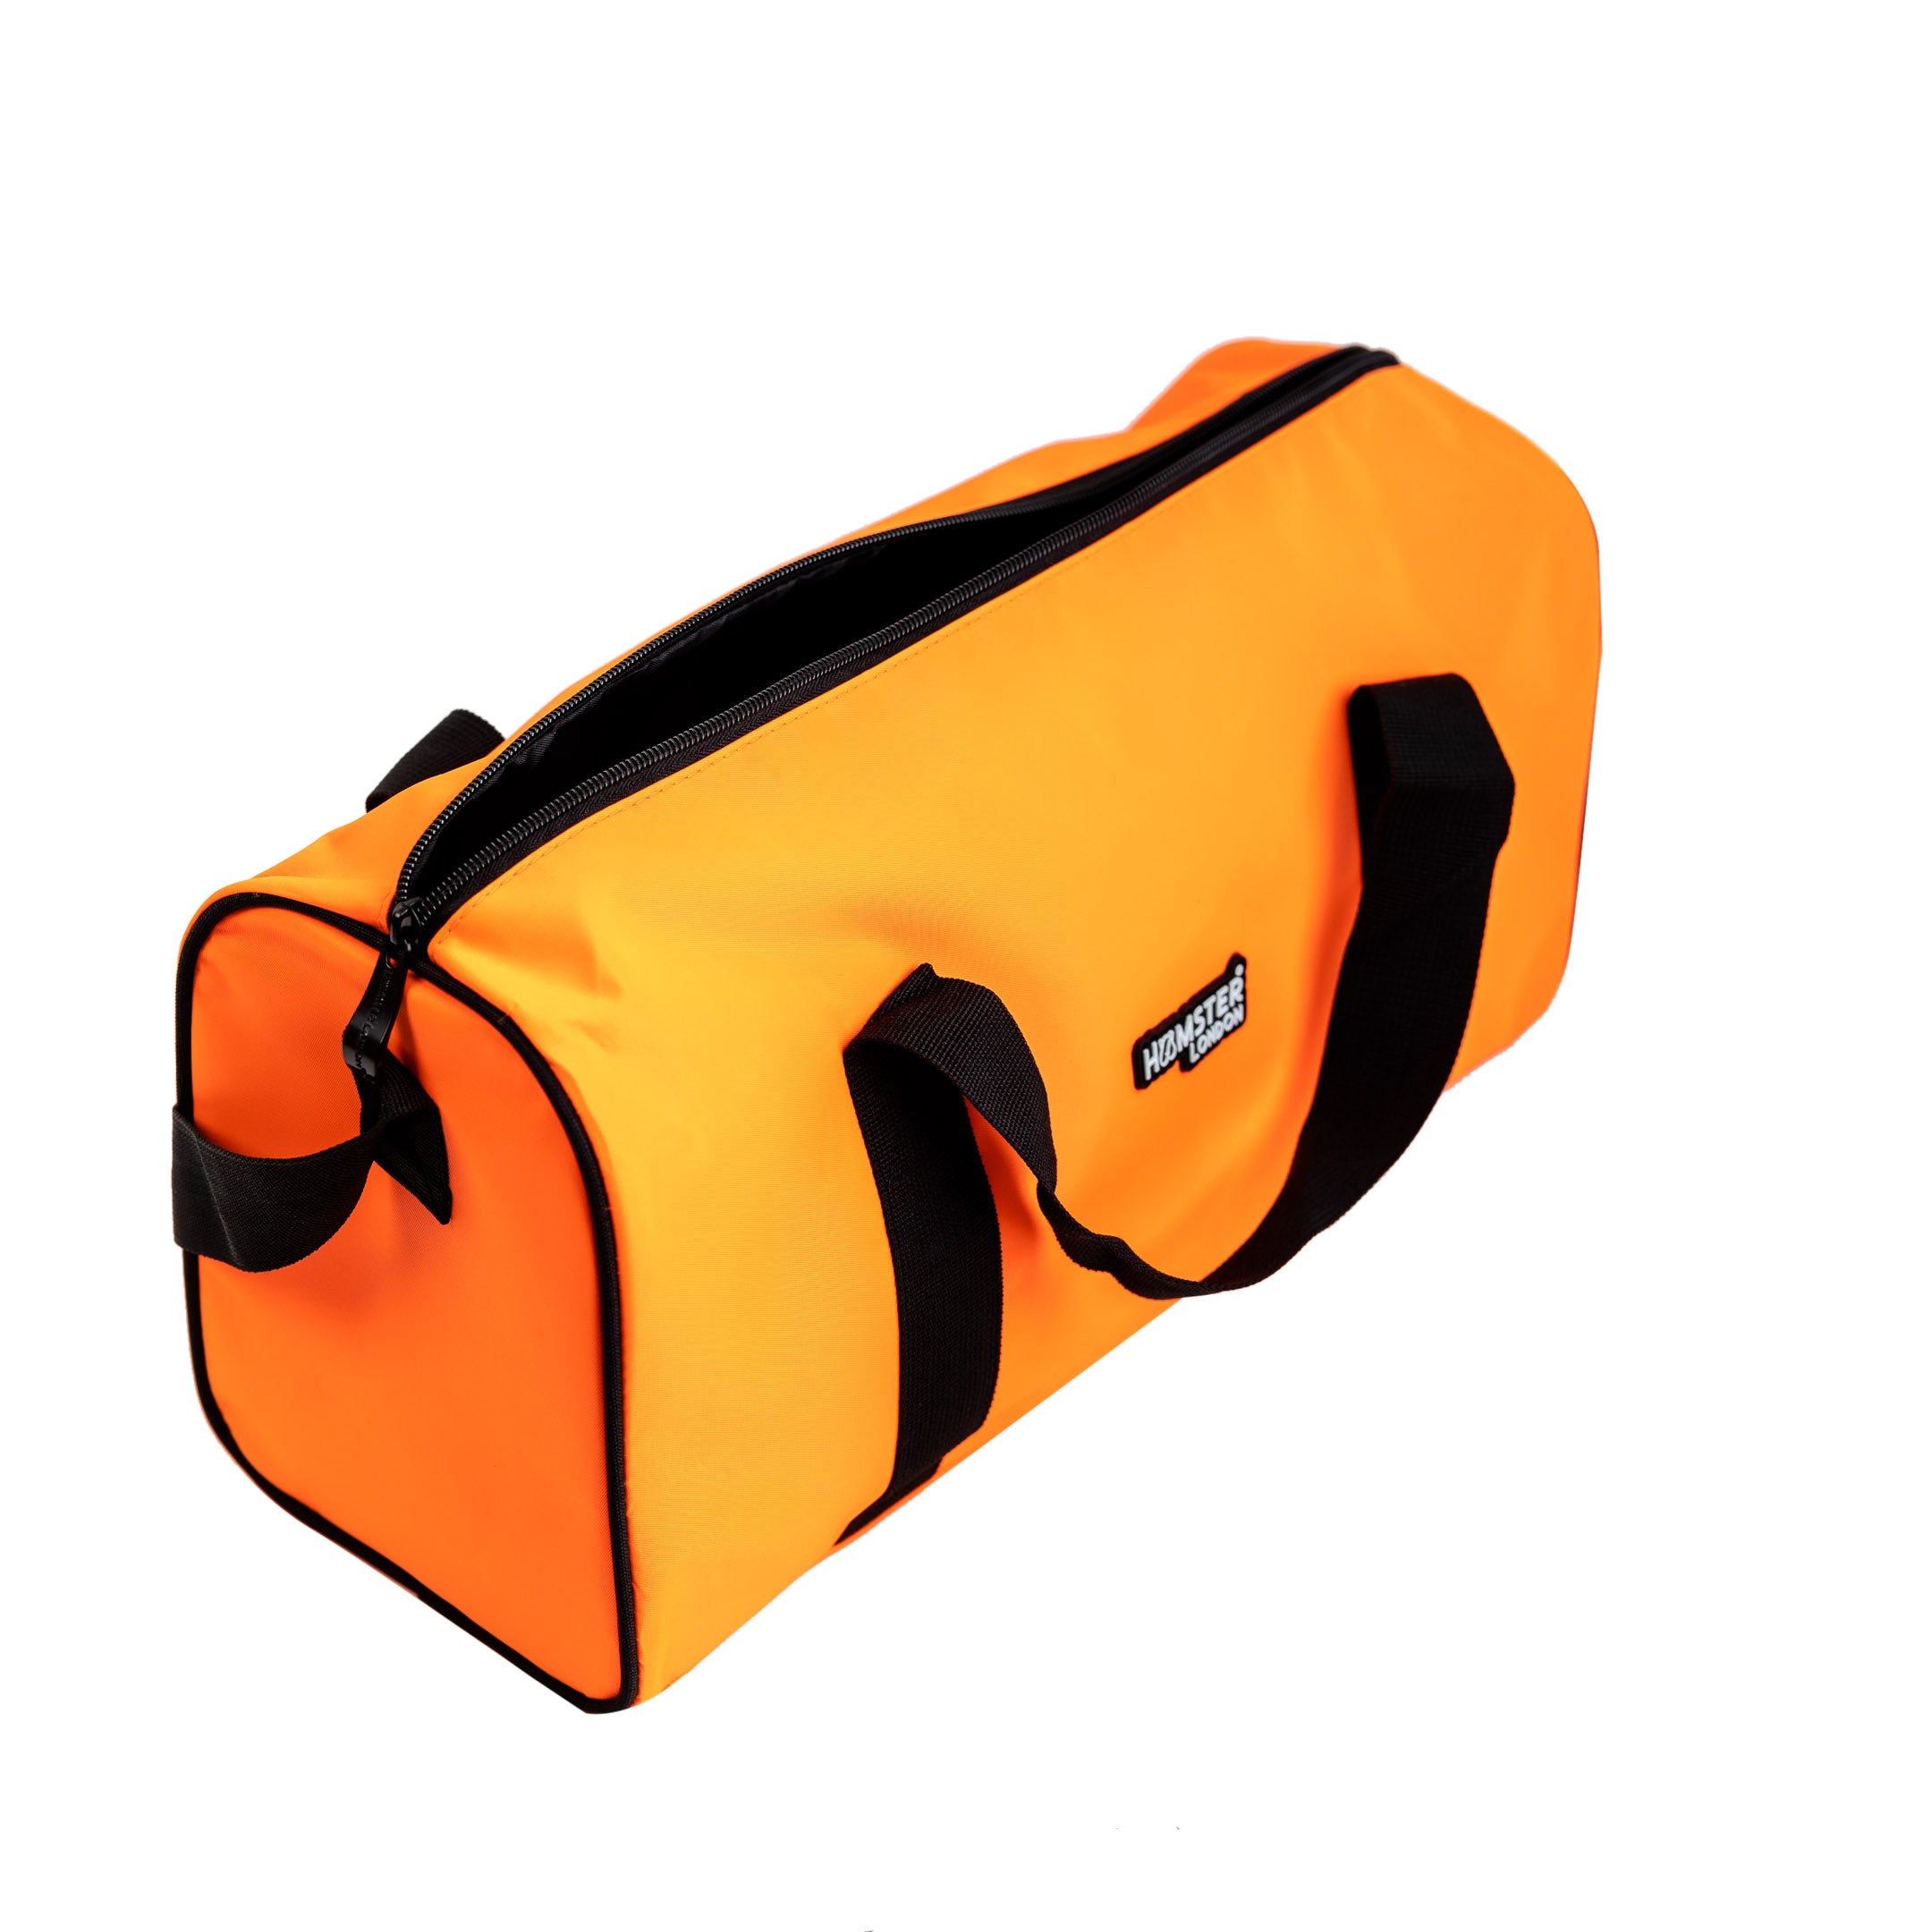 HL Neon Hype Duffle Bag Orange